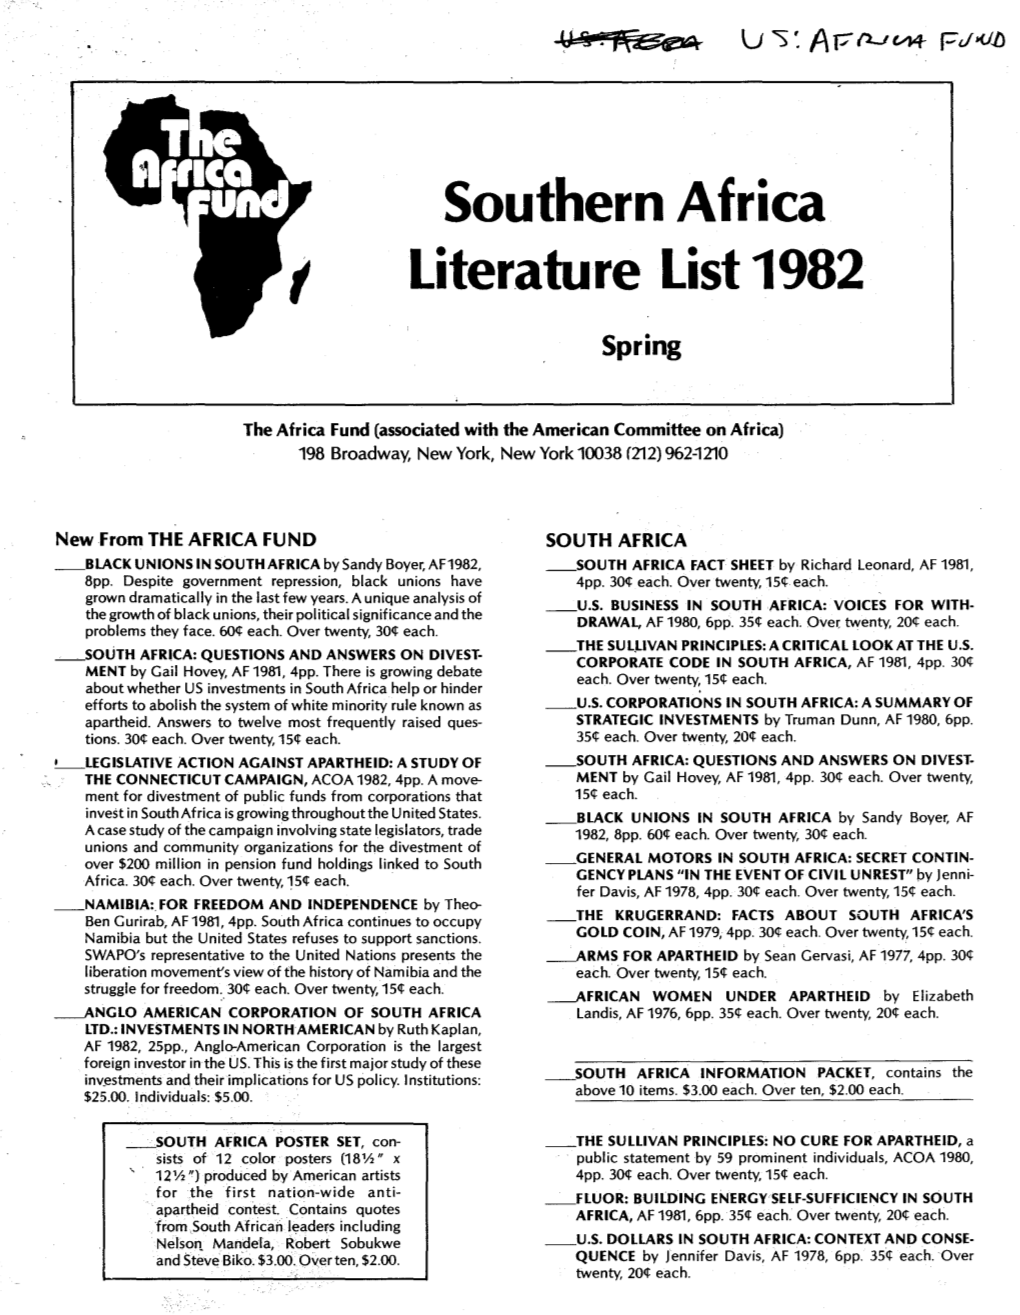 Southern Africa Literature List 1982